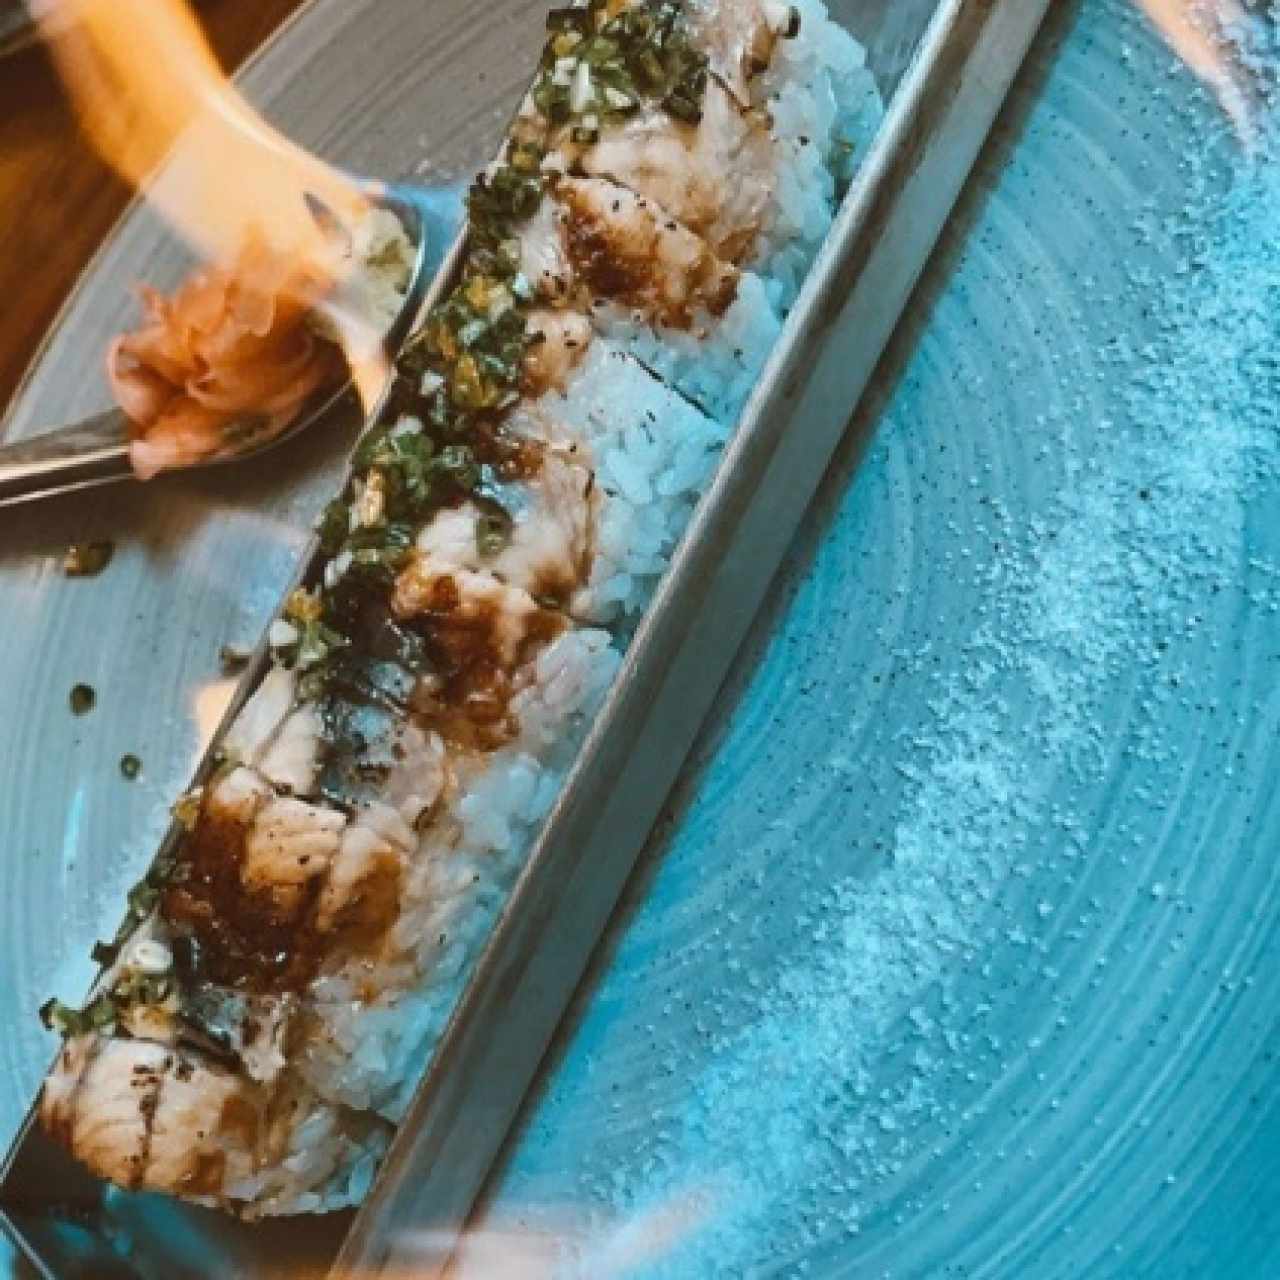 Sushi - Pasion Roll